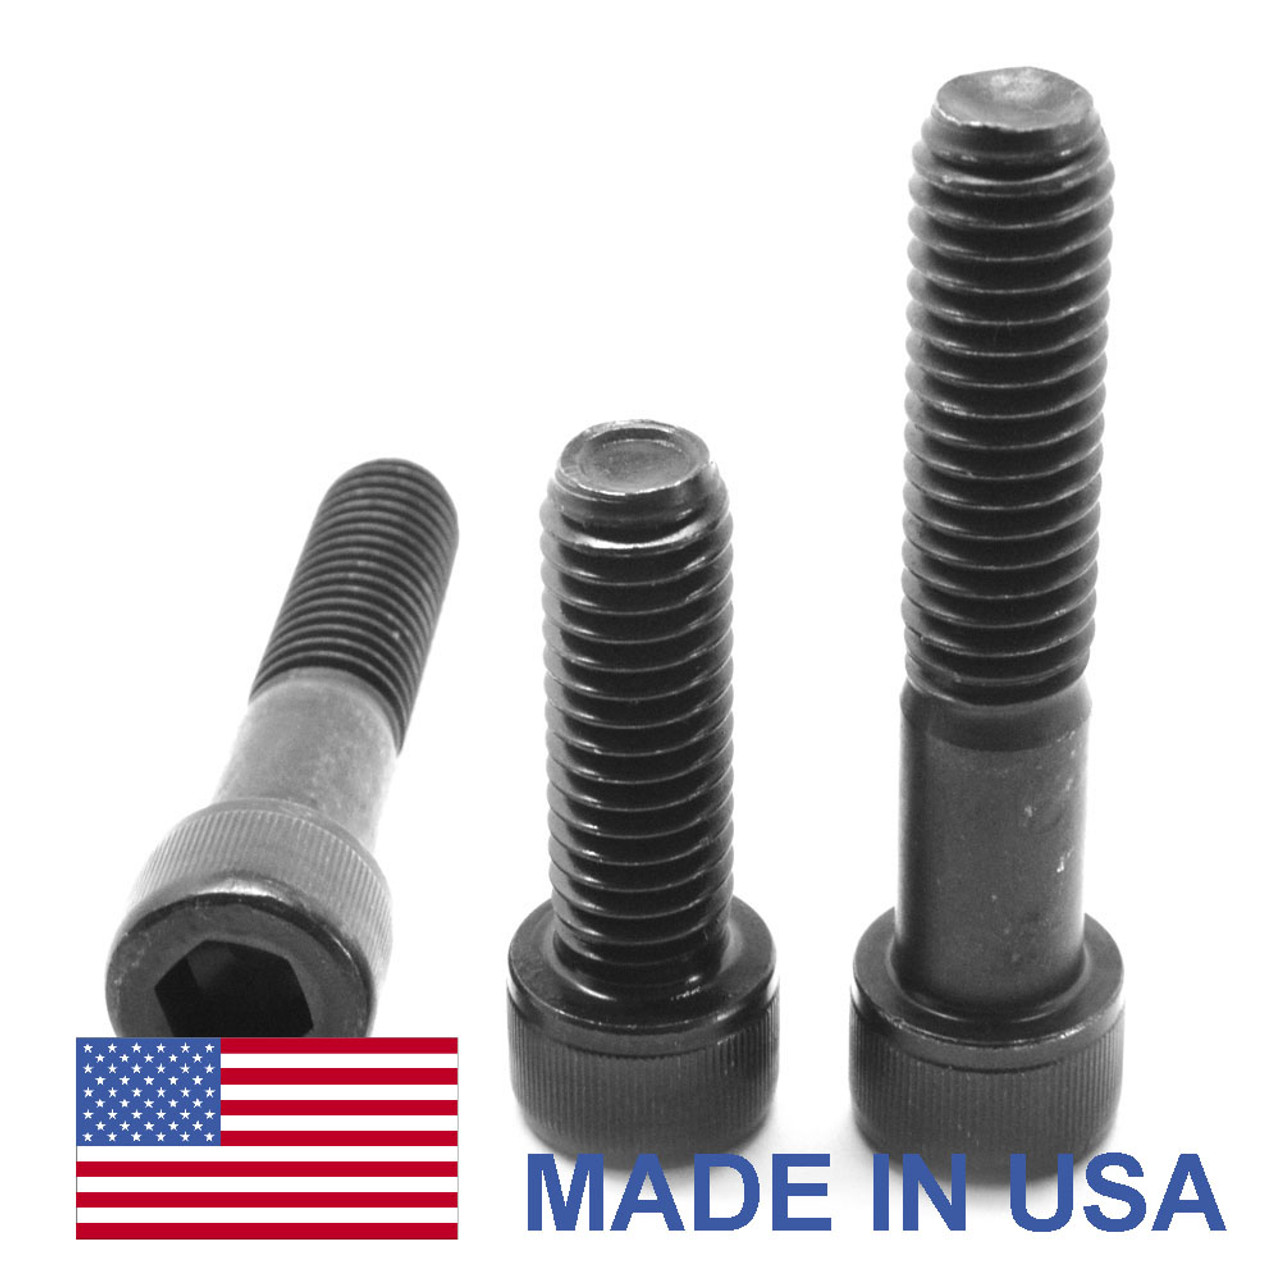 1-8 x 3 1/2 Coarse Thread Socket Head Cap Screw - USA Alloy Steel Black Oxide